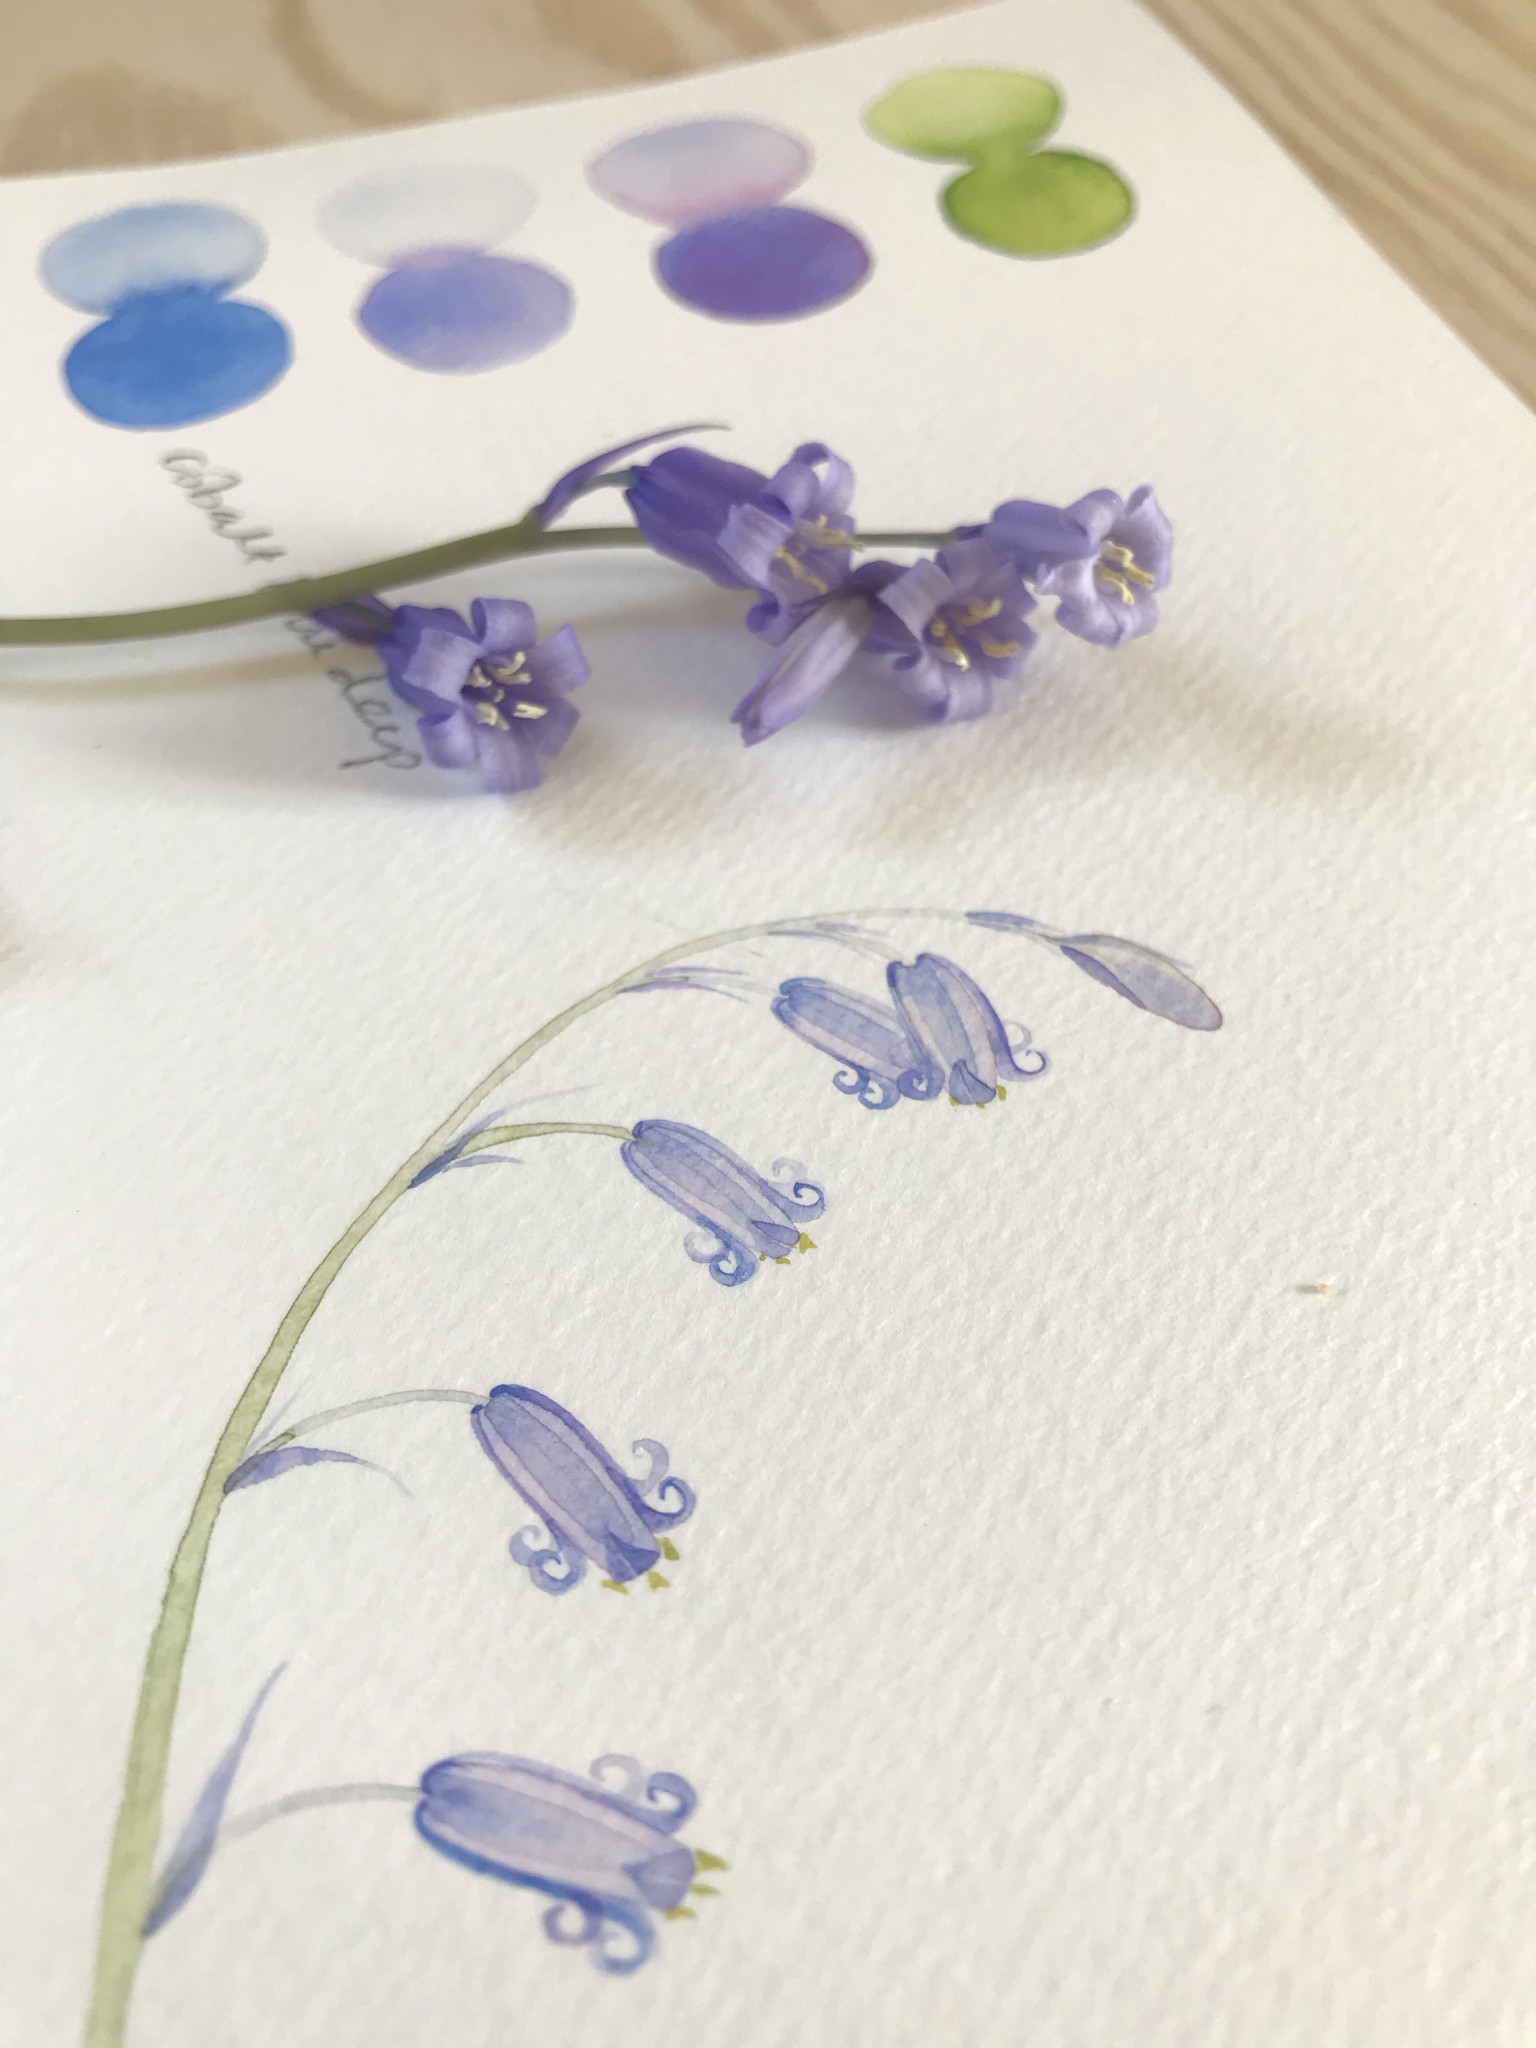 bluebell worksheet, bluebell floral tutorial, bluebell watercolour tutorial, bluebell art, floral art work, floral art tutorial, floral tutorial, flower watercolour tutorial